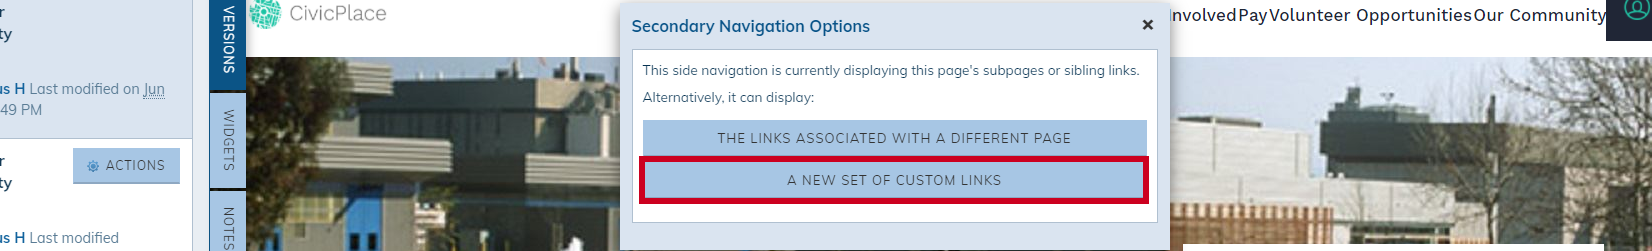 a new set of custom links